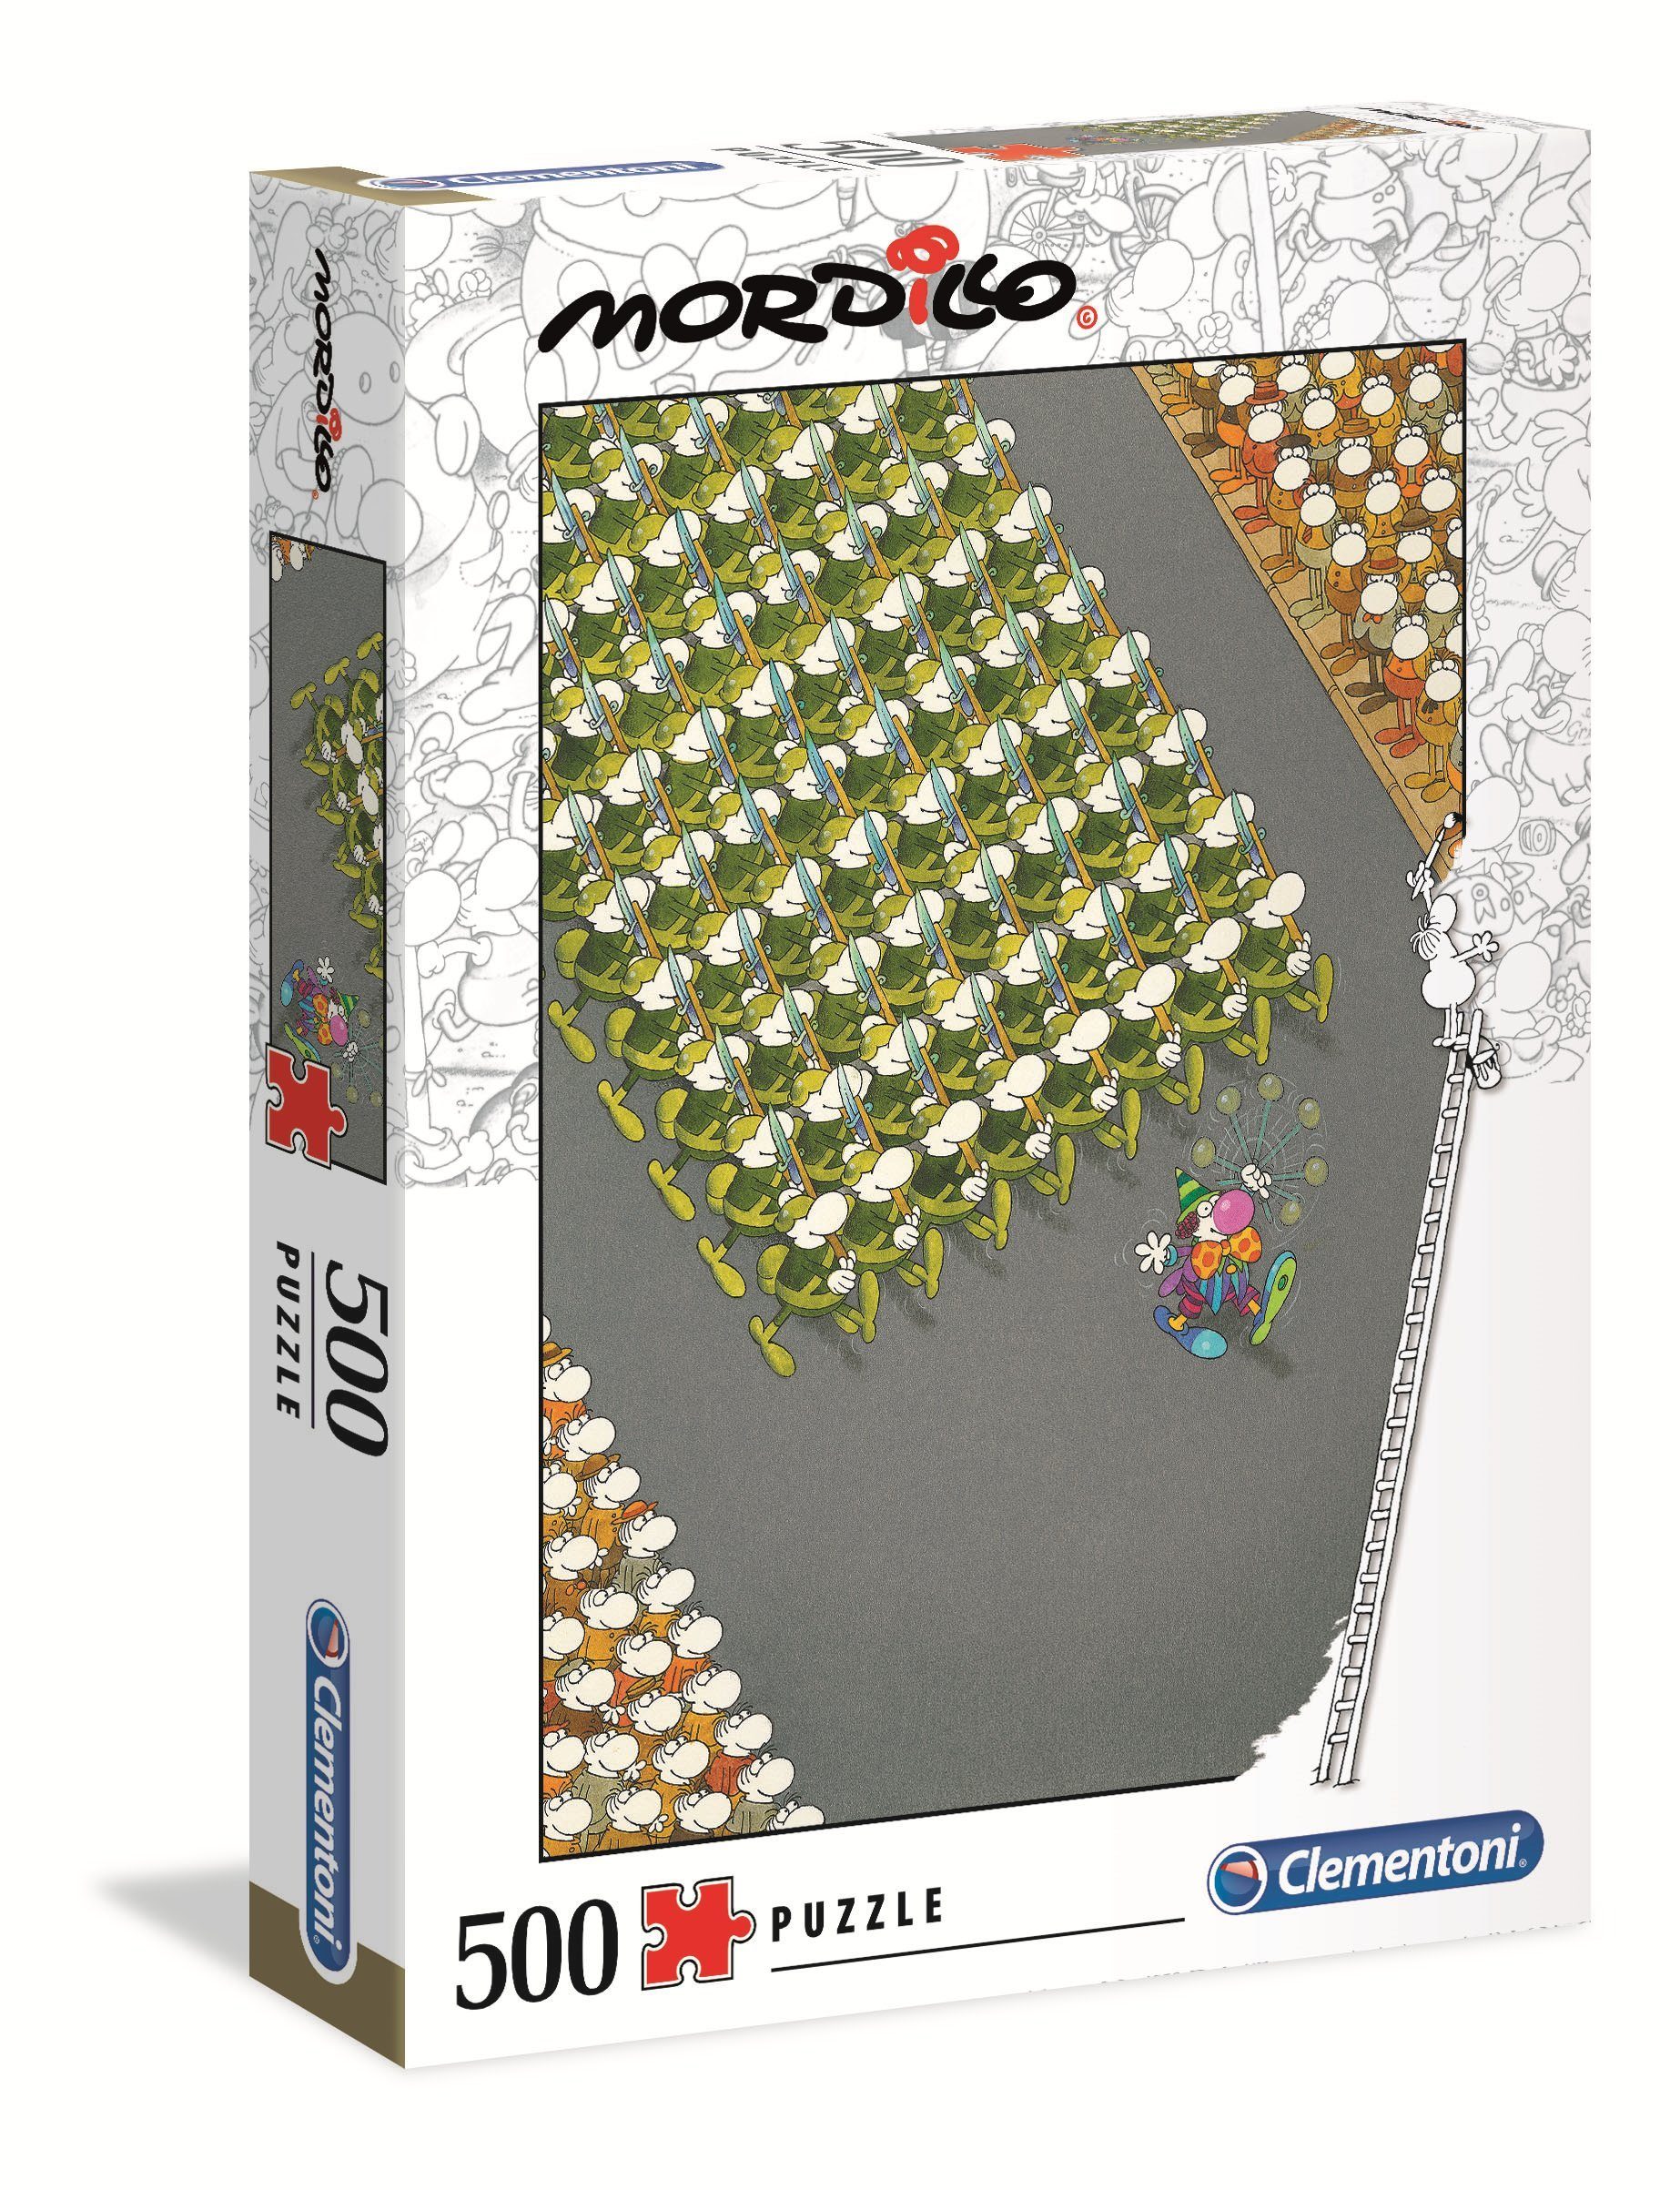 Clementoni® Puzzle 35078 Mordillo Der Marsch 500 Teile Puzzle, 500 Puzzleteile | Puzzle